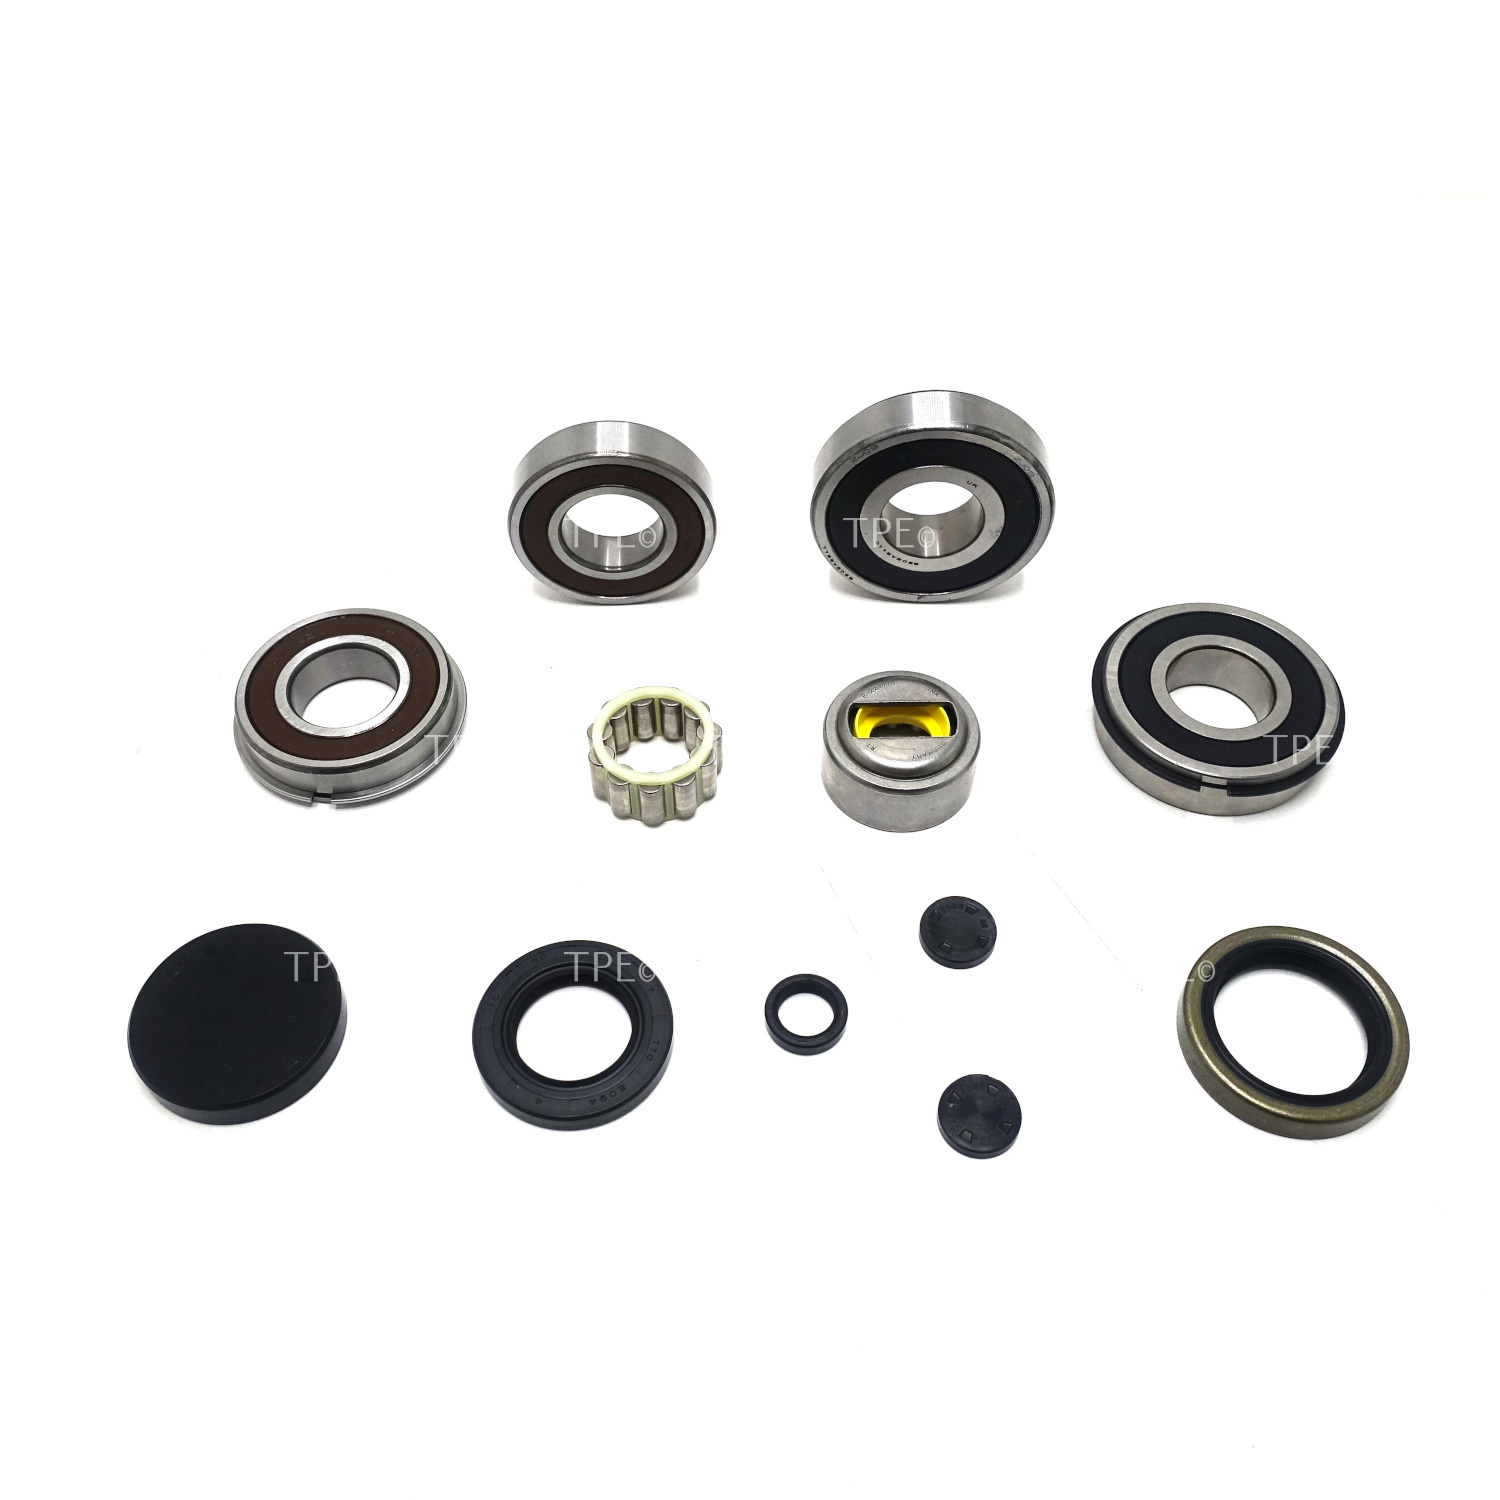 BMW.KB.05 This Bearing & Seal Kit contains the following Parts:

• 6 Bearings
• 3 Seals
• 3 Caps